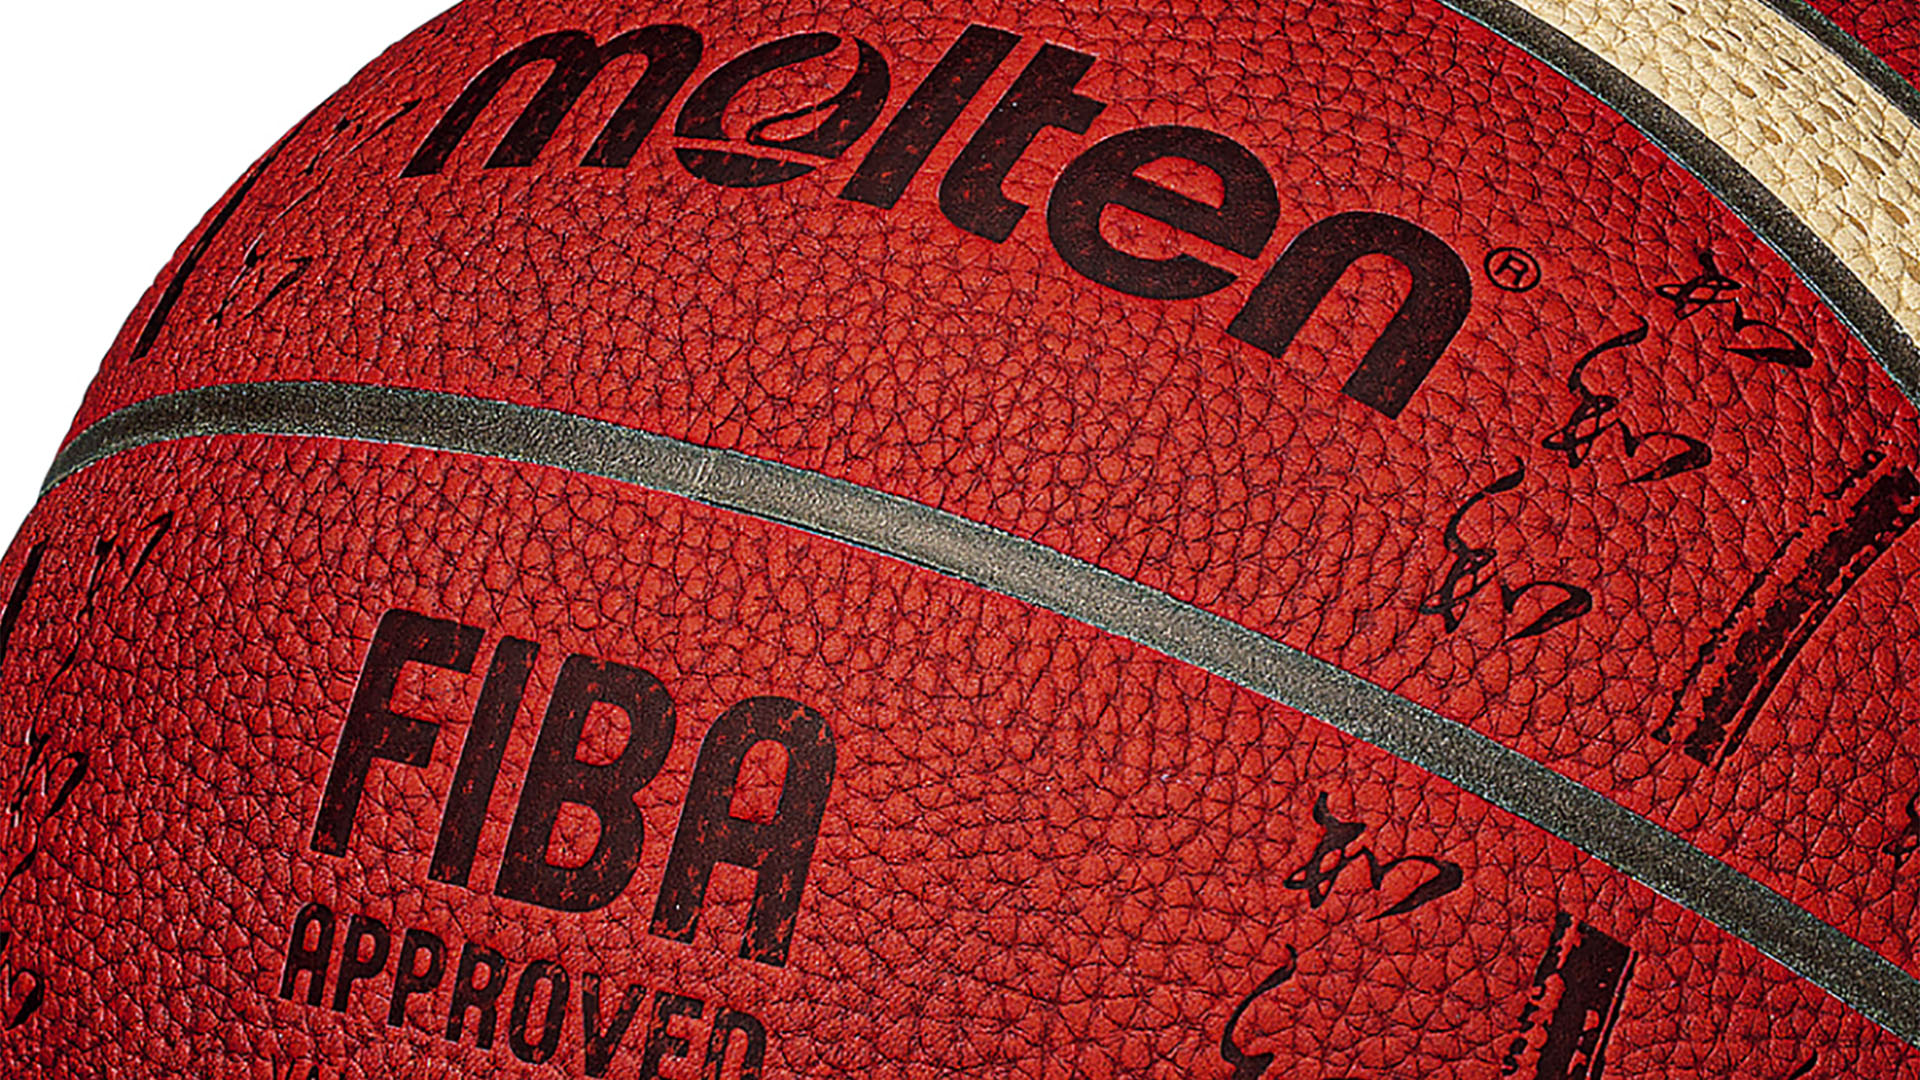 61%OFF!】 molten モルテン B6G5000S0J FIBA スペシャルエディション バスケットボール 6号球 レディース 一般女子  fucoa.cl